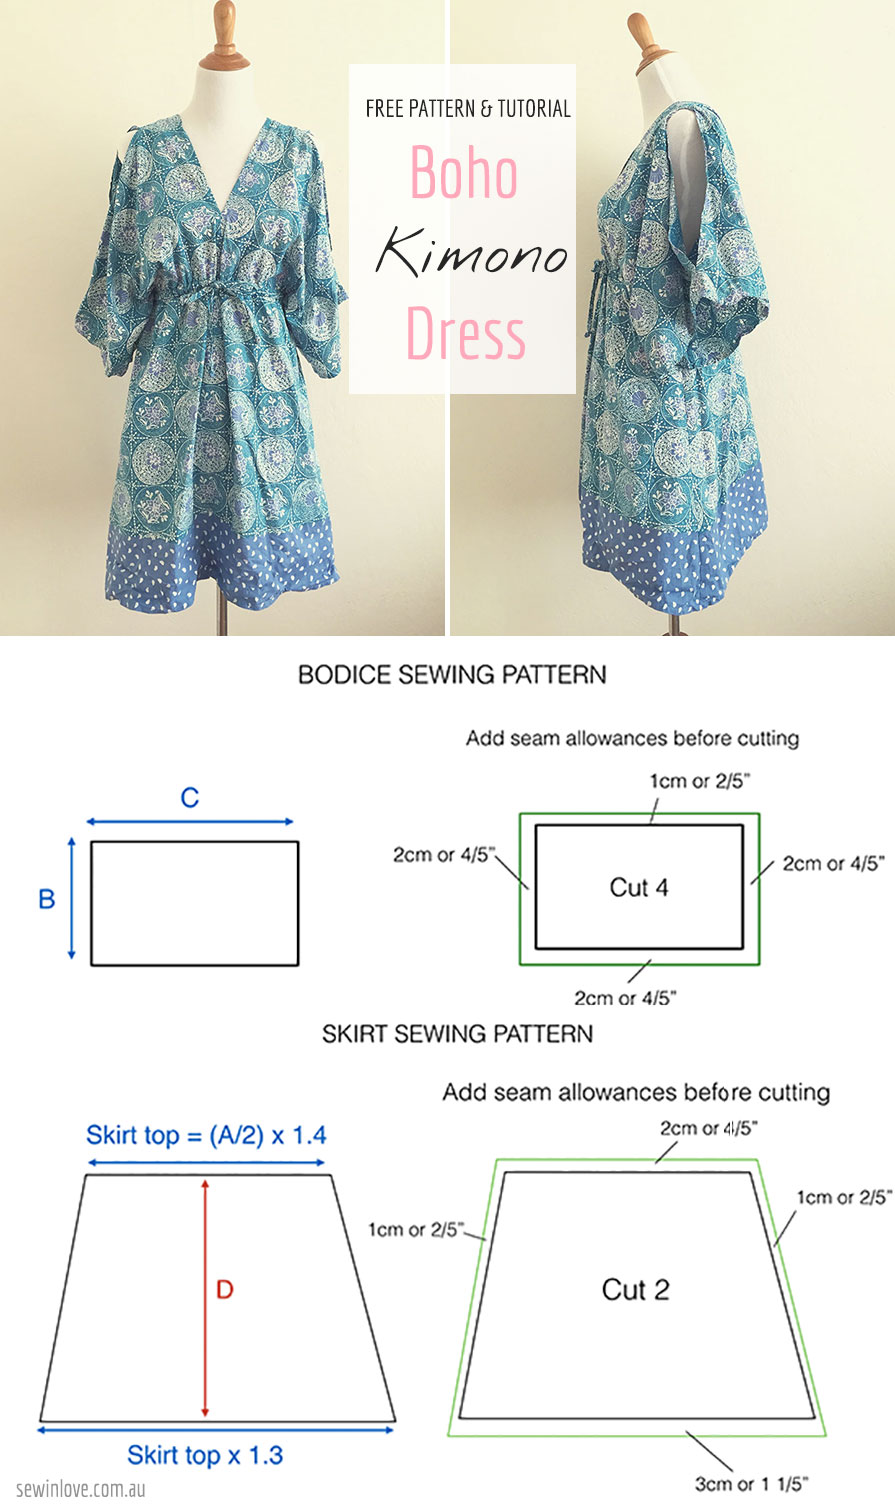 Free Sewing Pattern & Tutorial Free People inspired summer dress Sew